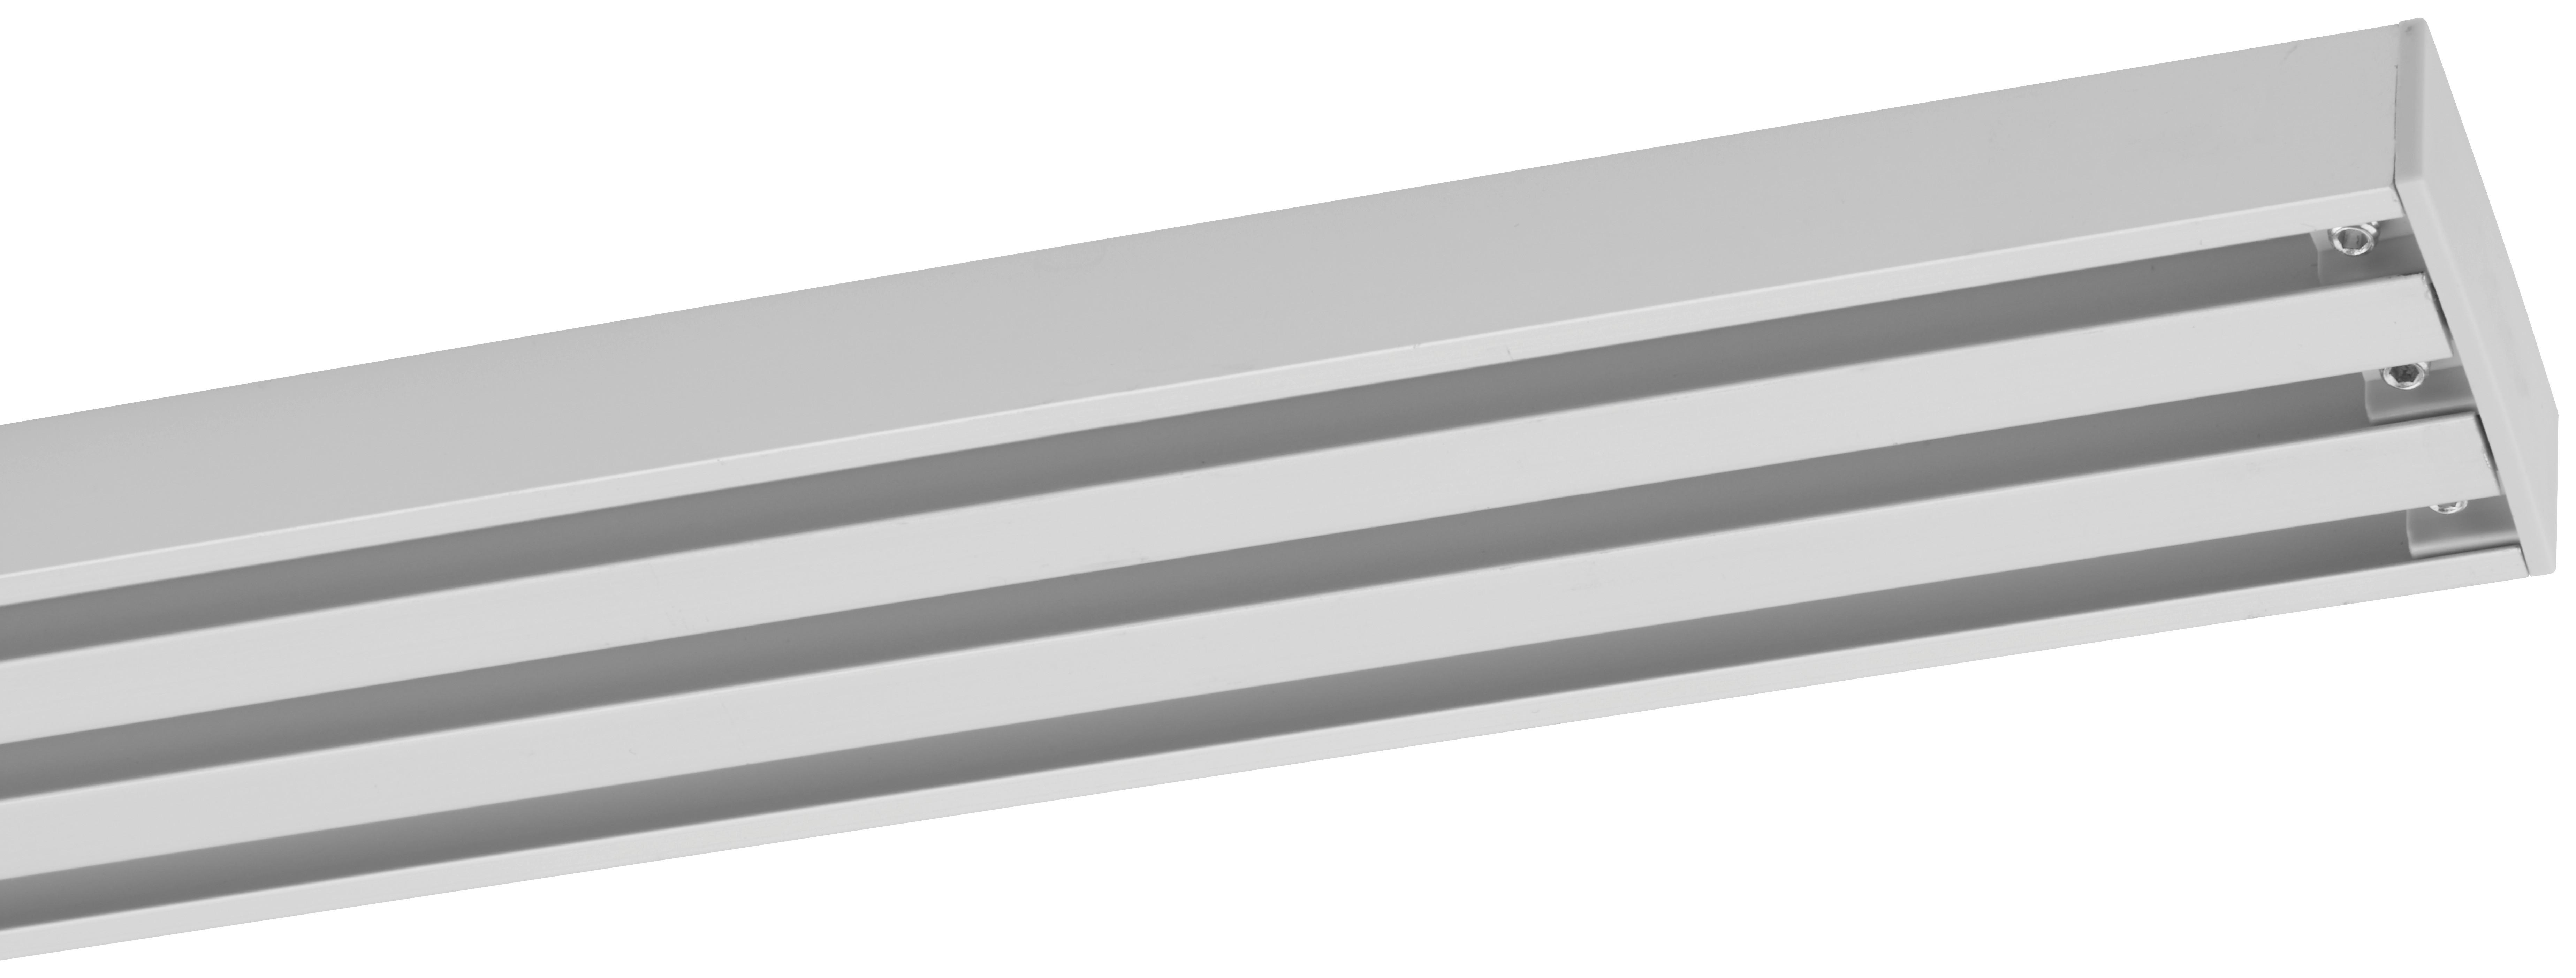 Vorhangschiene Style Alufarben, ca. 160cm - Alufarben, Metall (160cm) - Premium Living